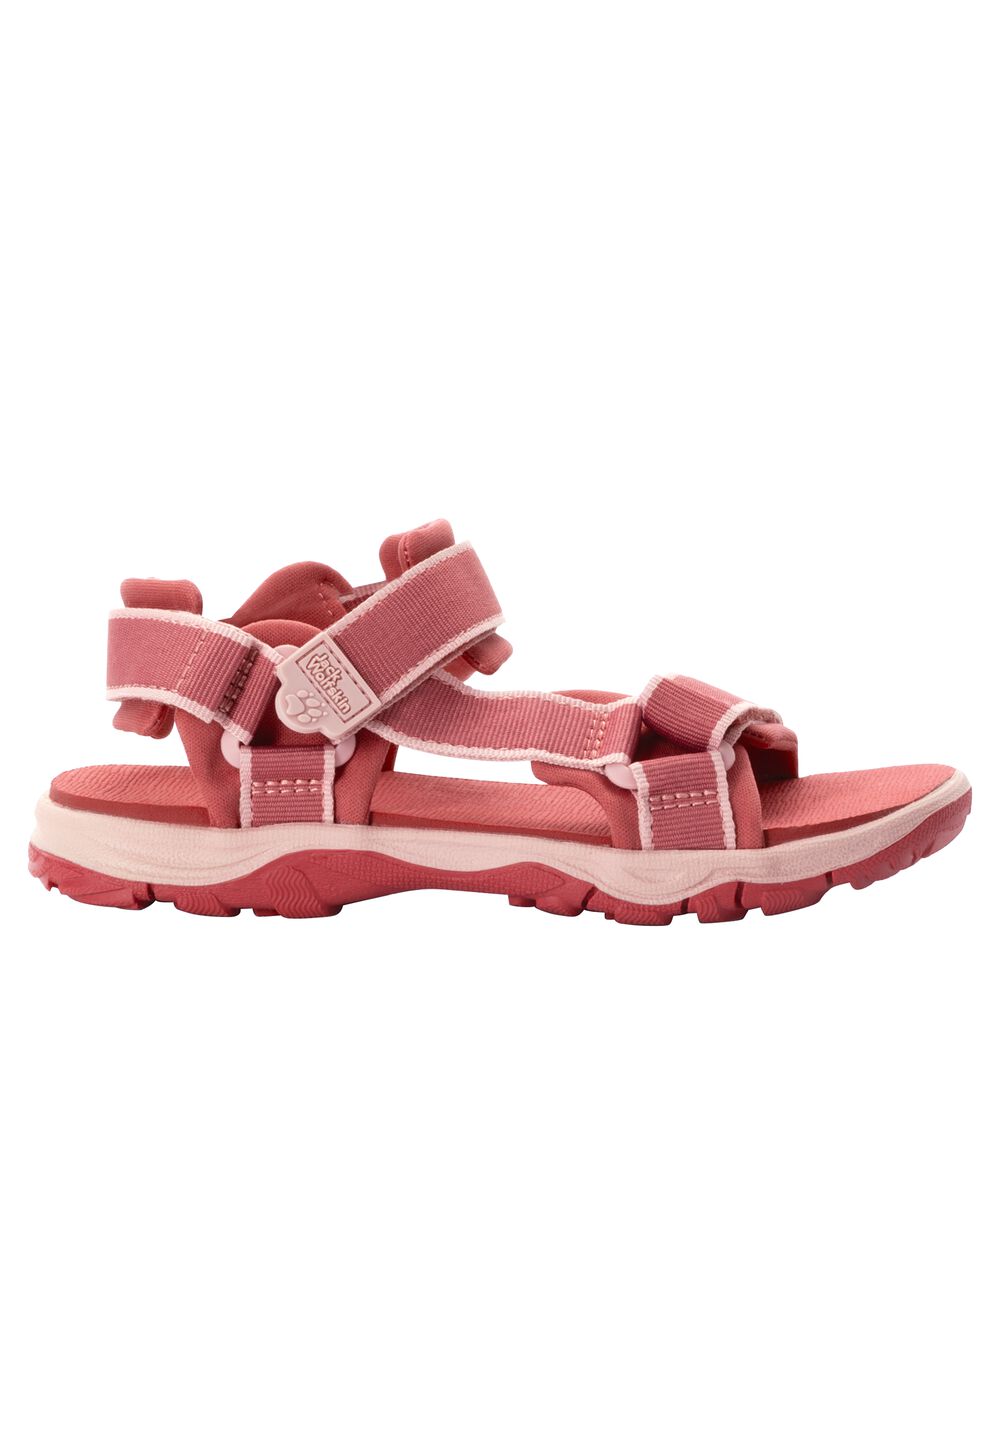 Jack Wolfskin Seven Seas 3 Kids Kinderen sandalen 34 soft pink soft pink